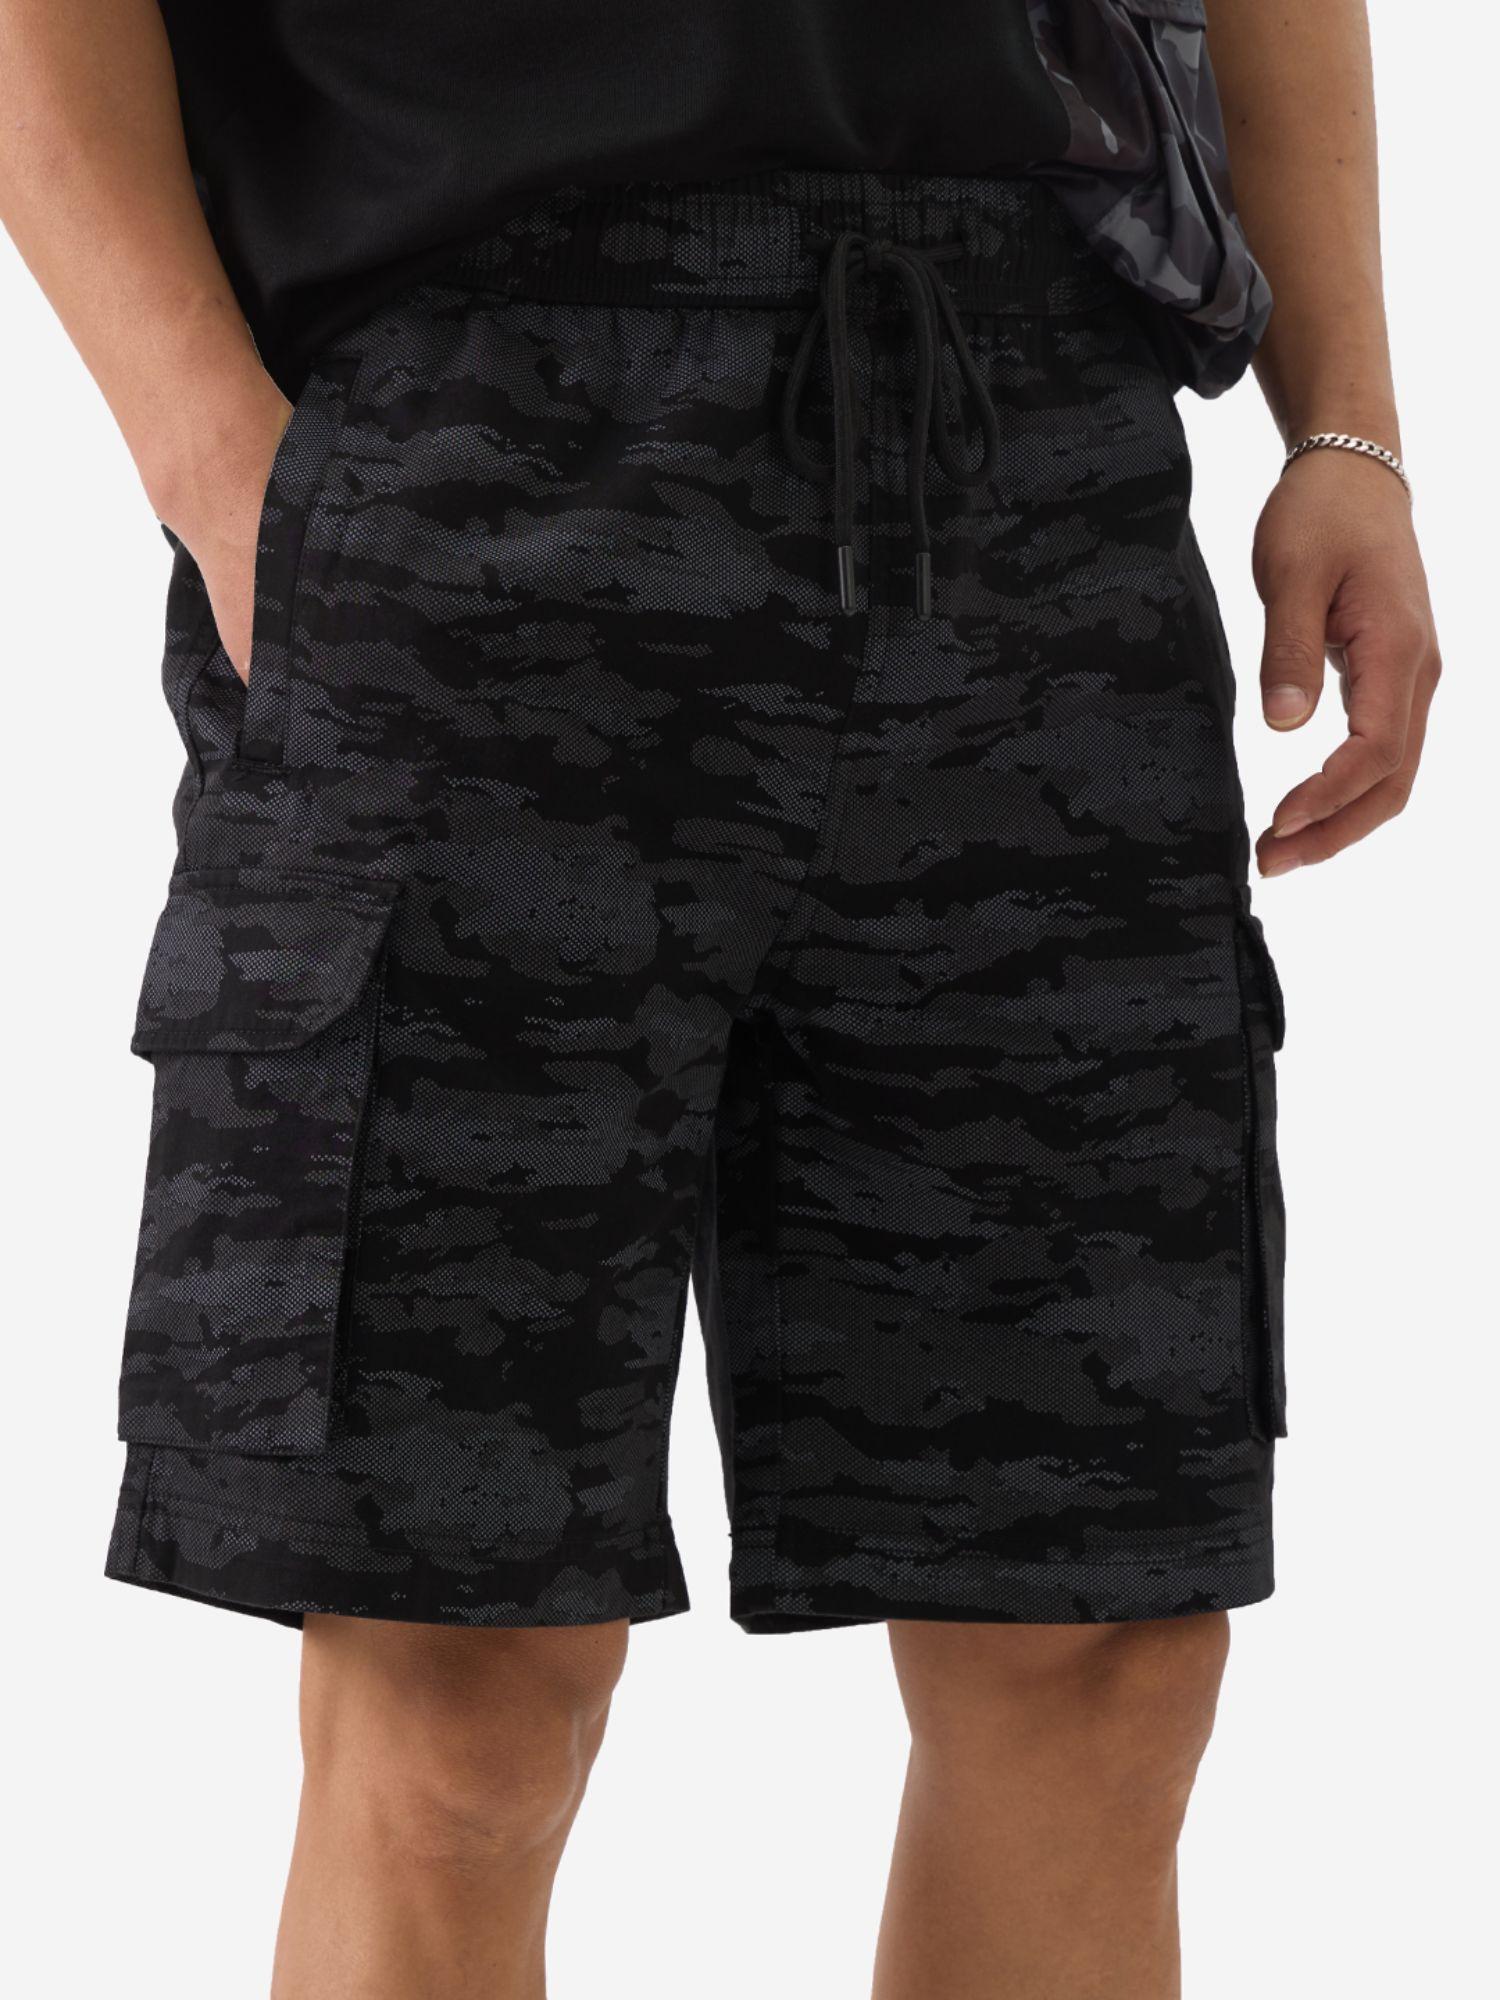 originals: grey camo men cargo shorts